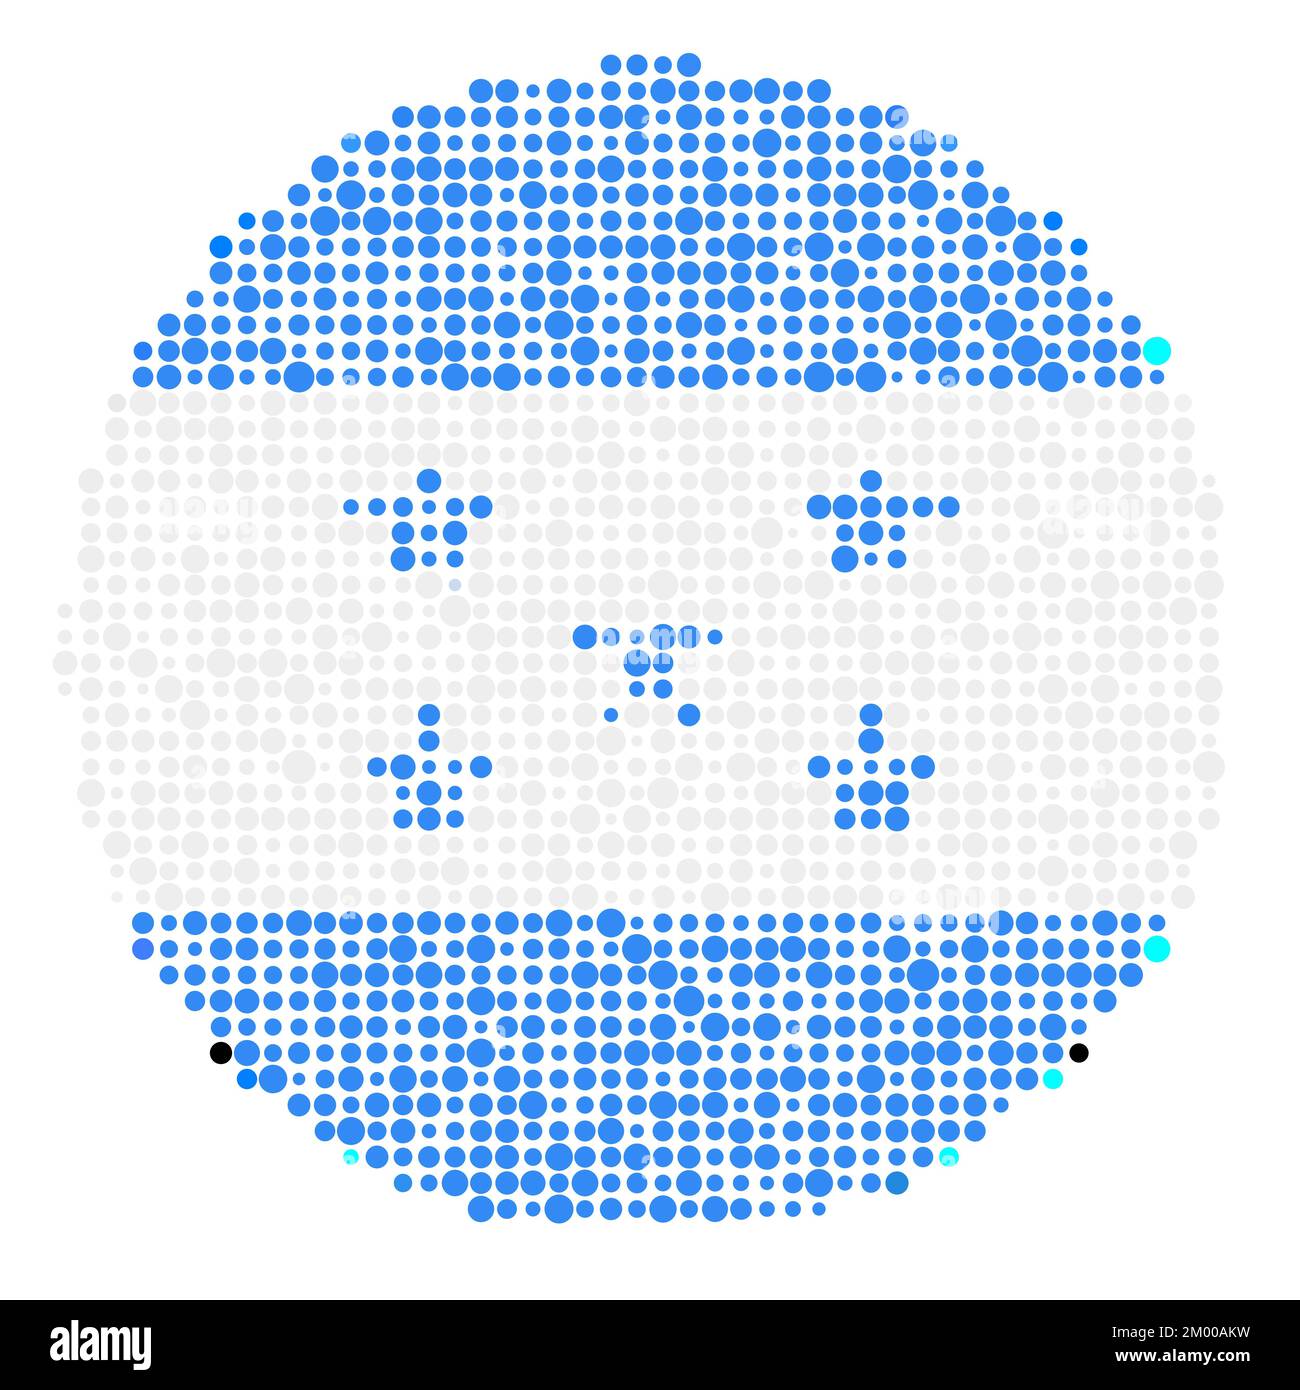 Honduras Map Silhouette Pixelated generative pattern illustration Stock Vector